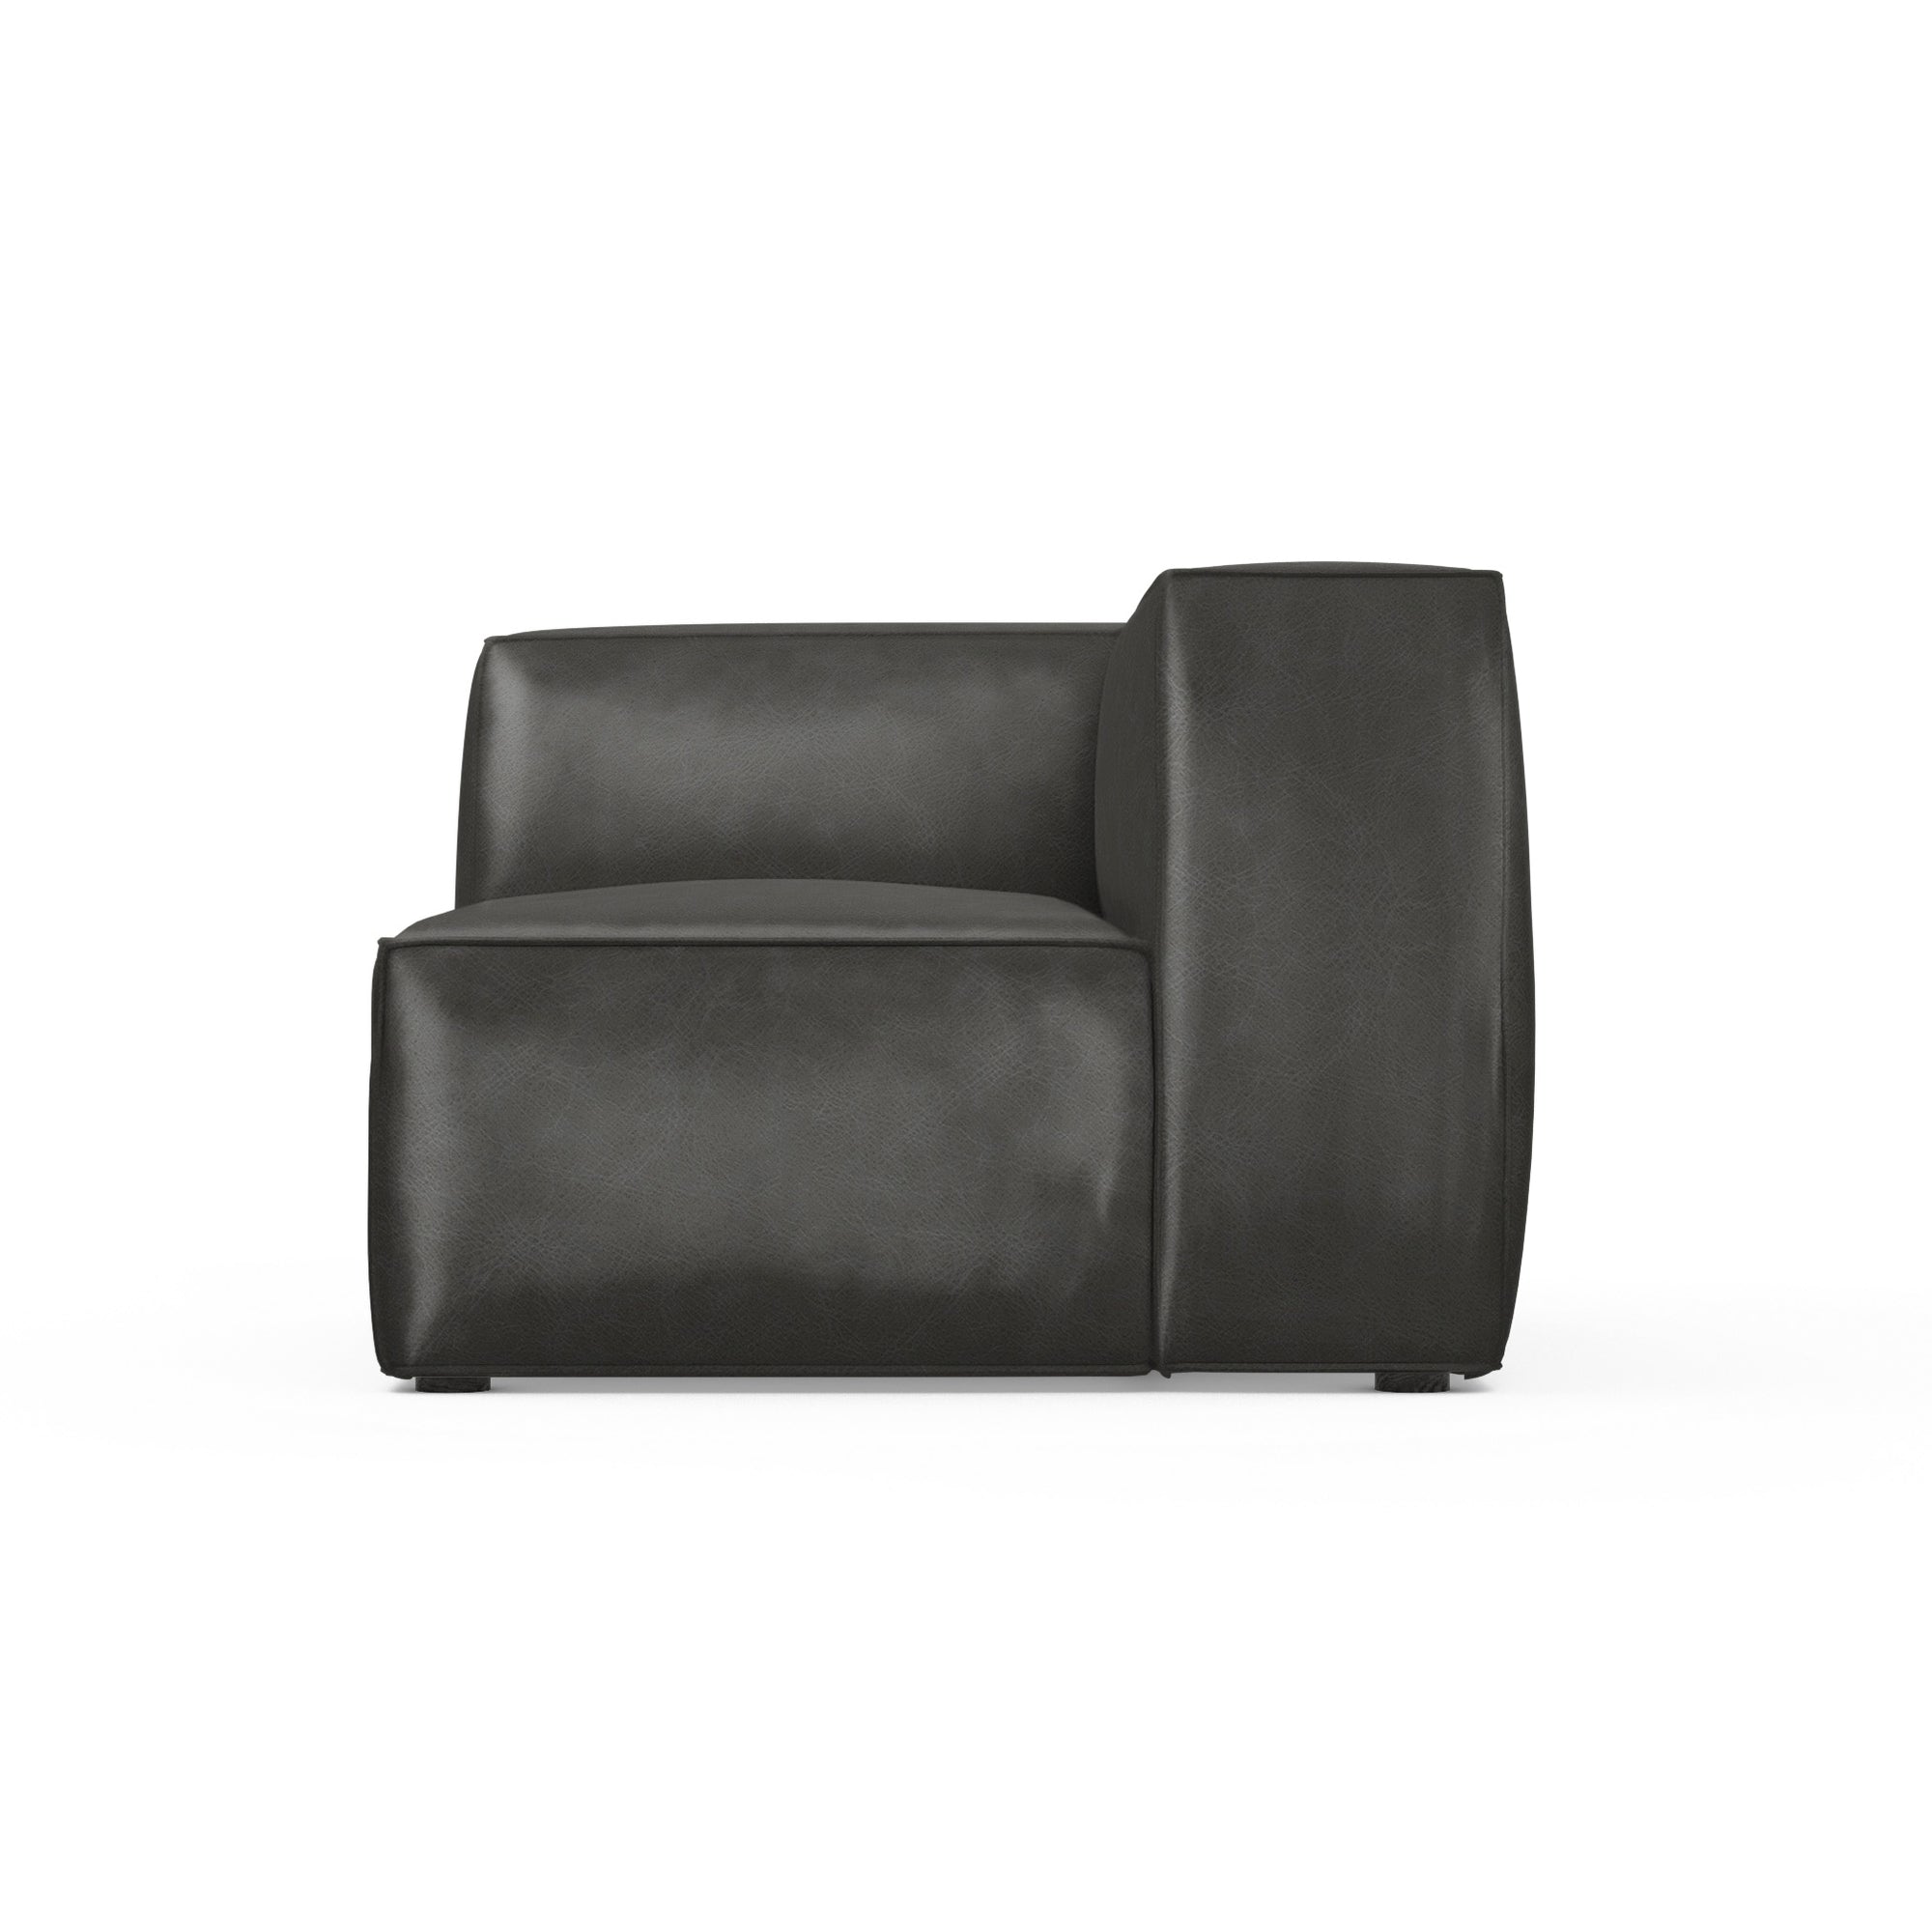 Varick Corner Chair - Graphite Vintage Leather